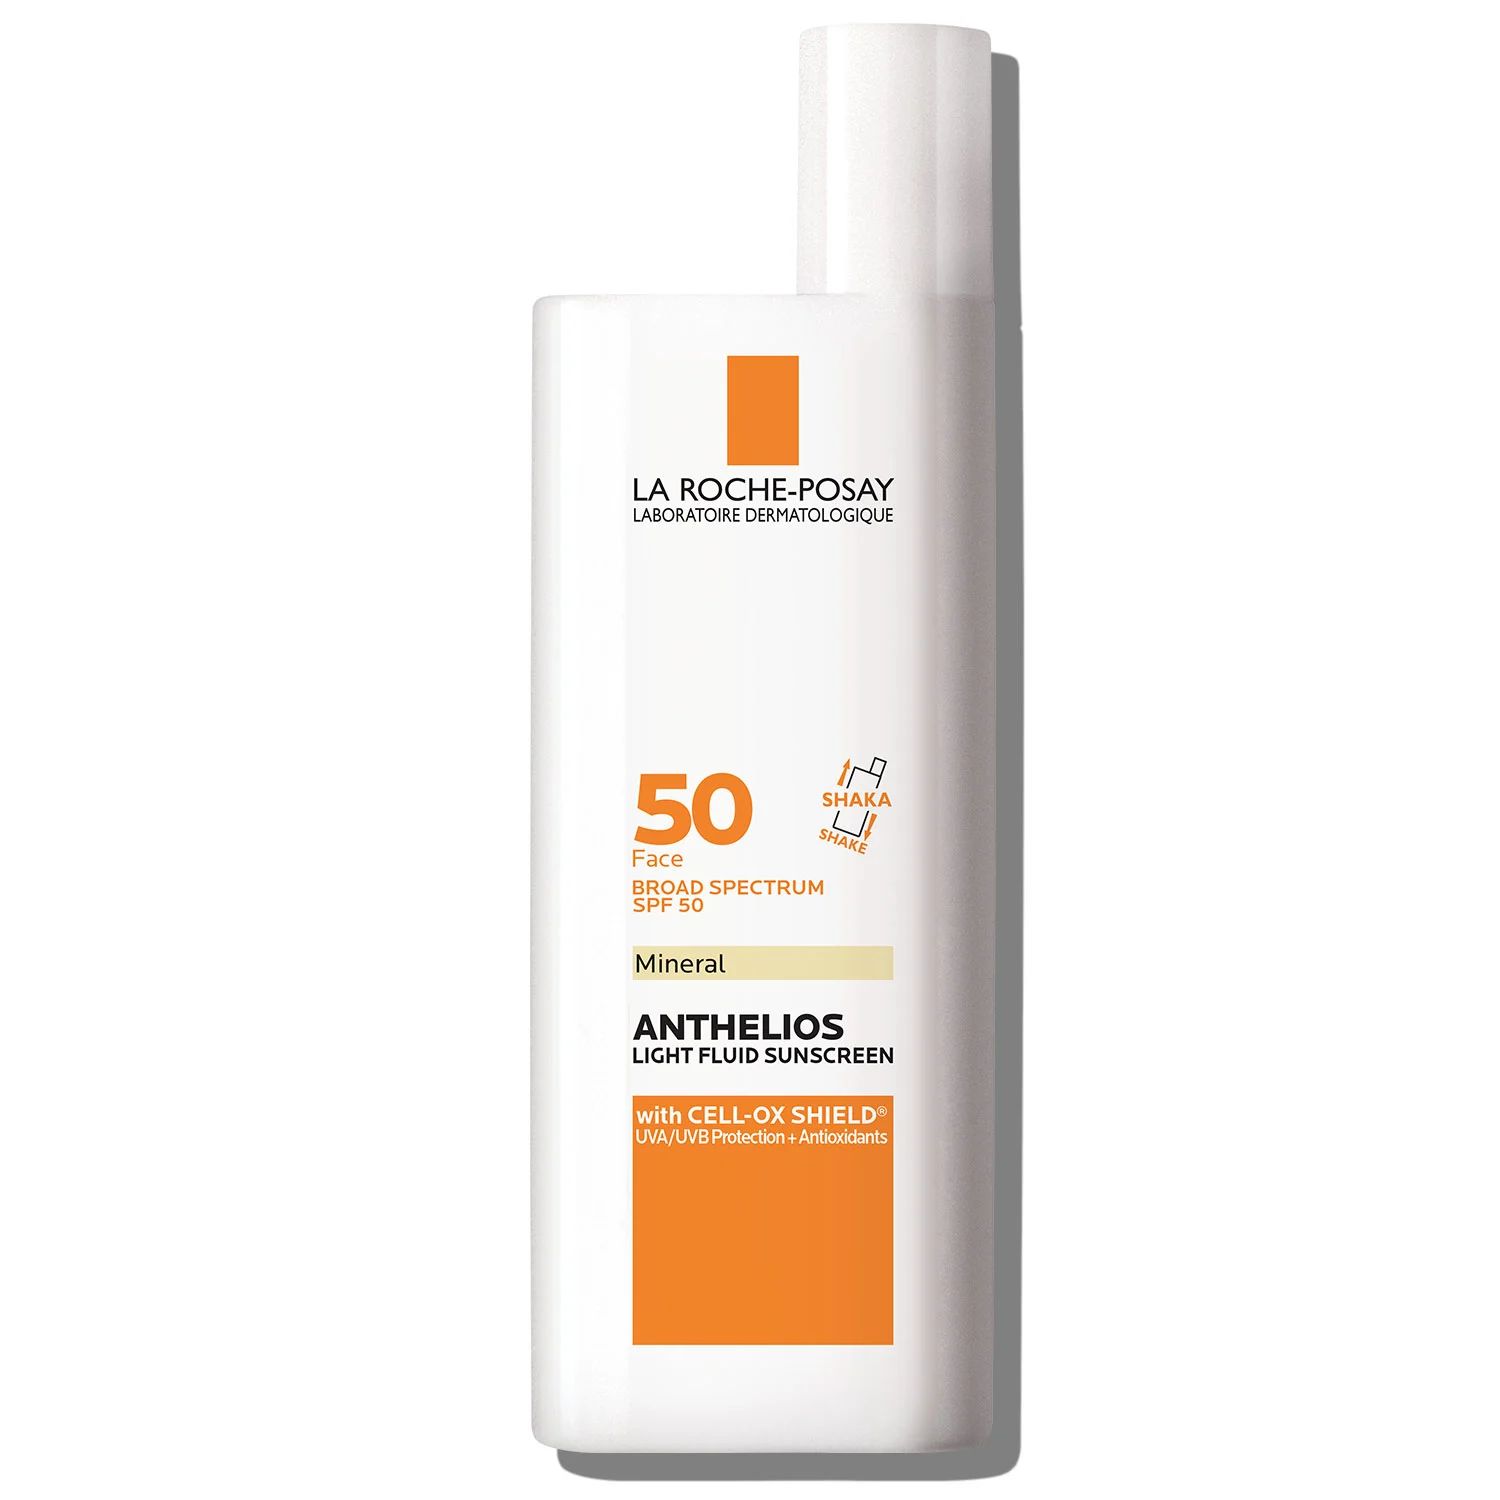 Anthelios Mineral Zinc Oxide Sunscreen SPF 50 | La Roche-Posay (US)